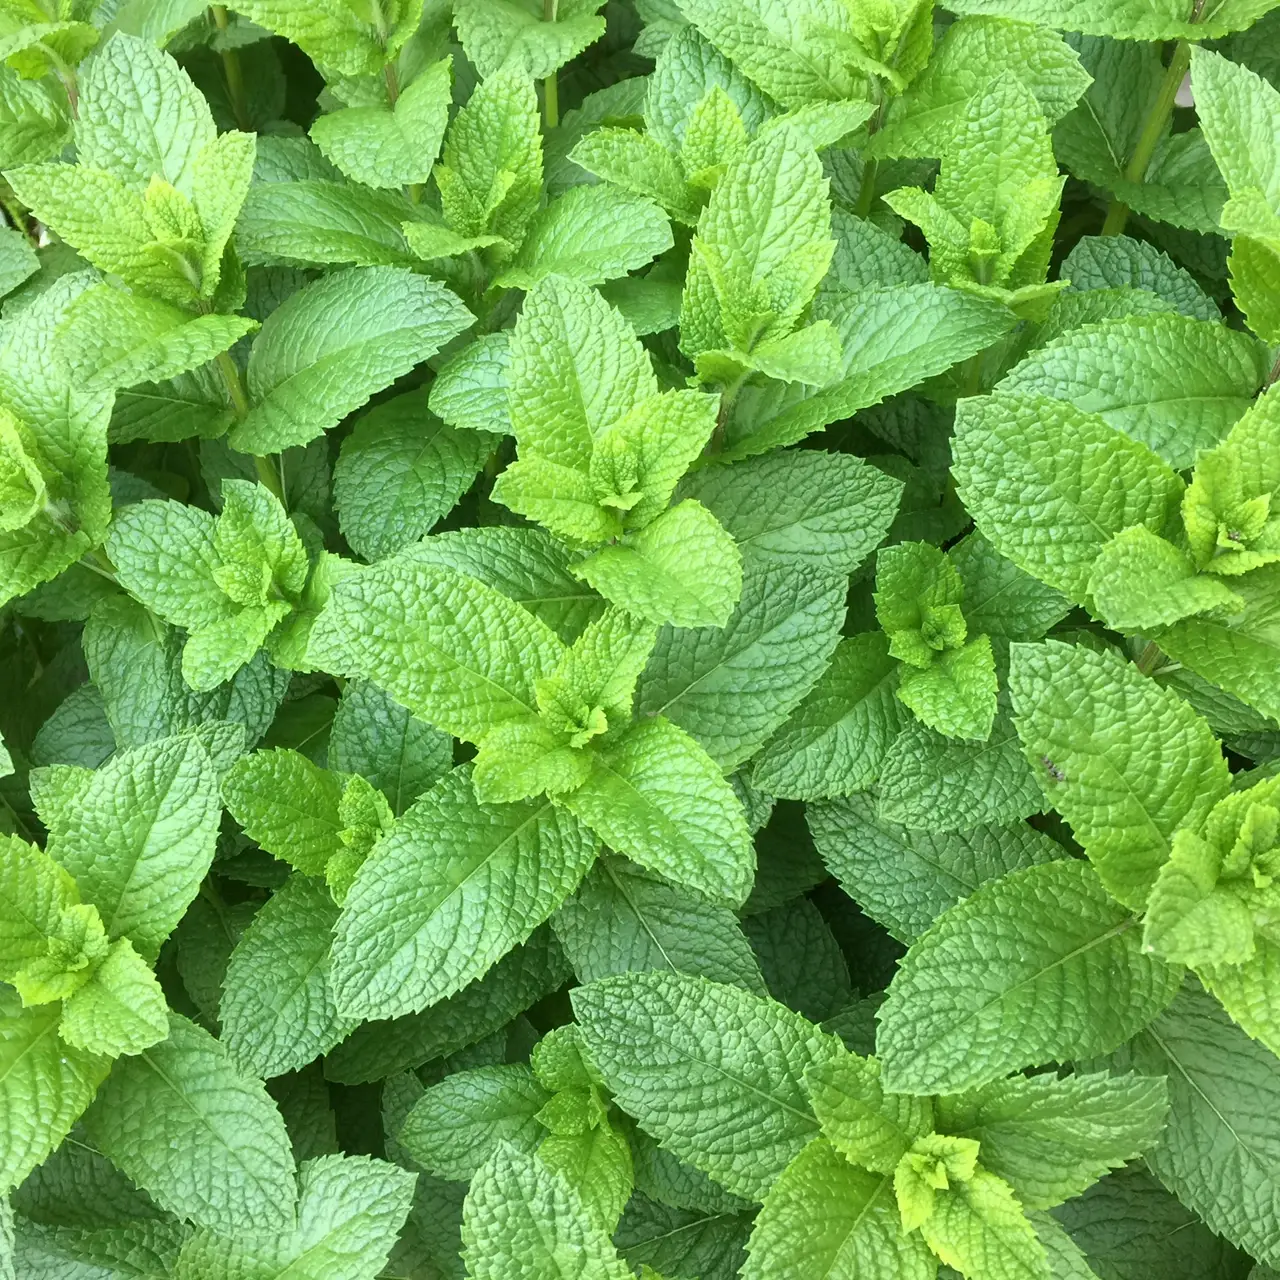 Leaves of mint